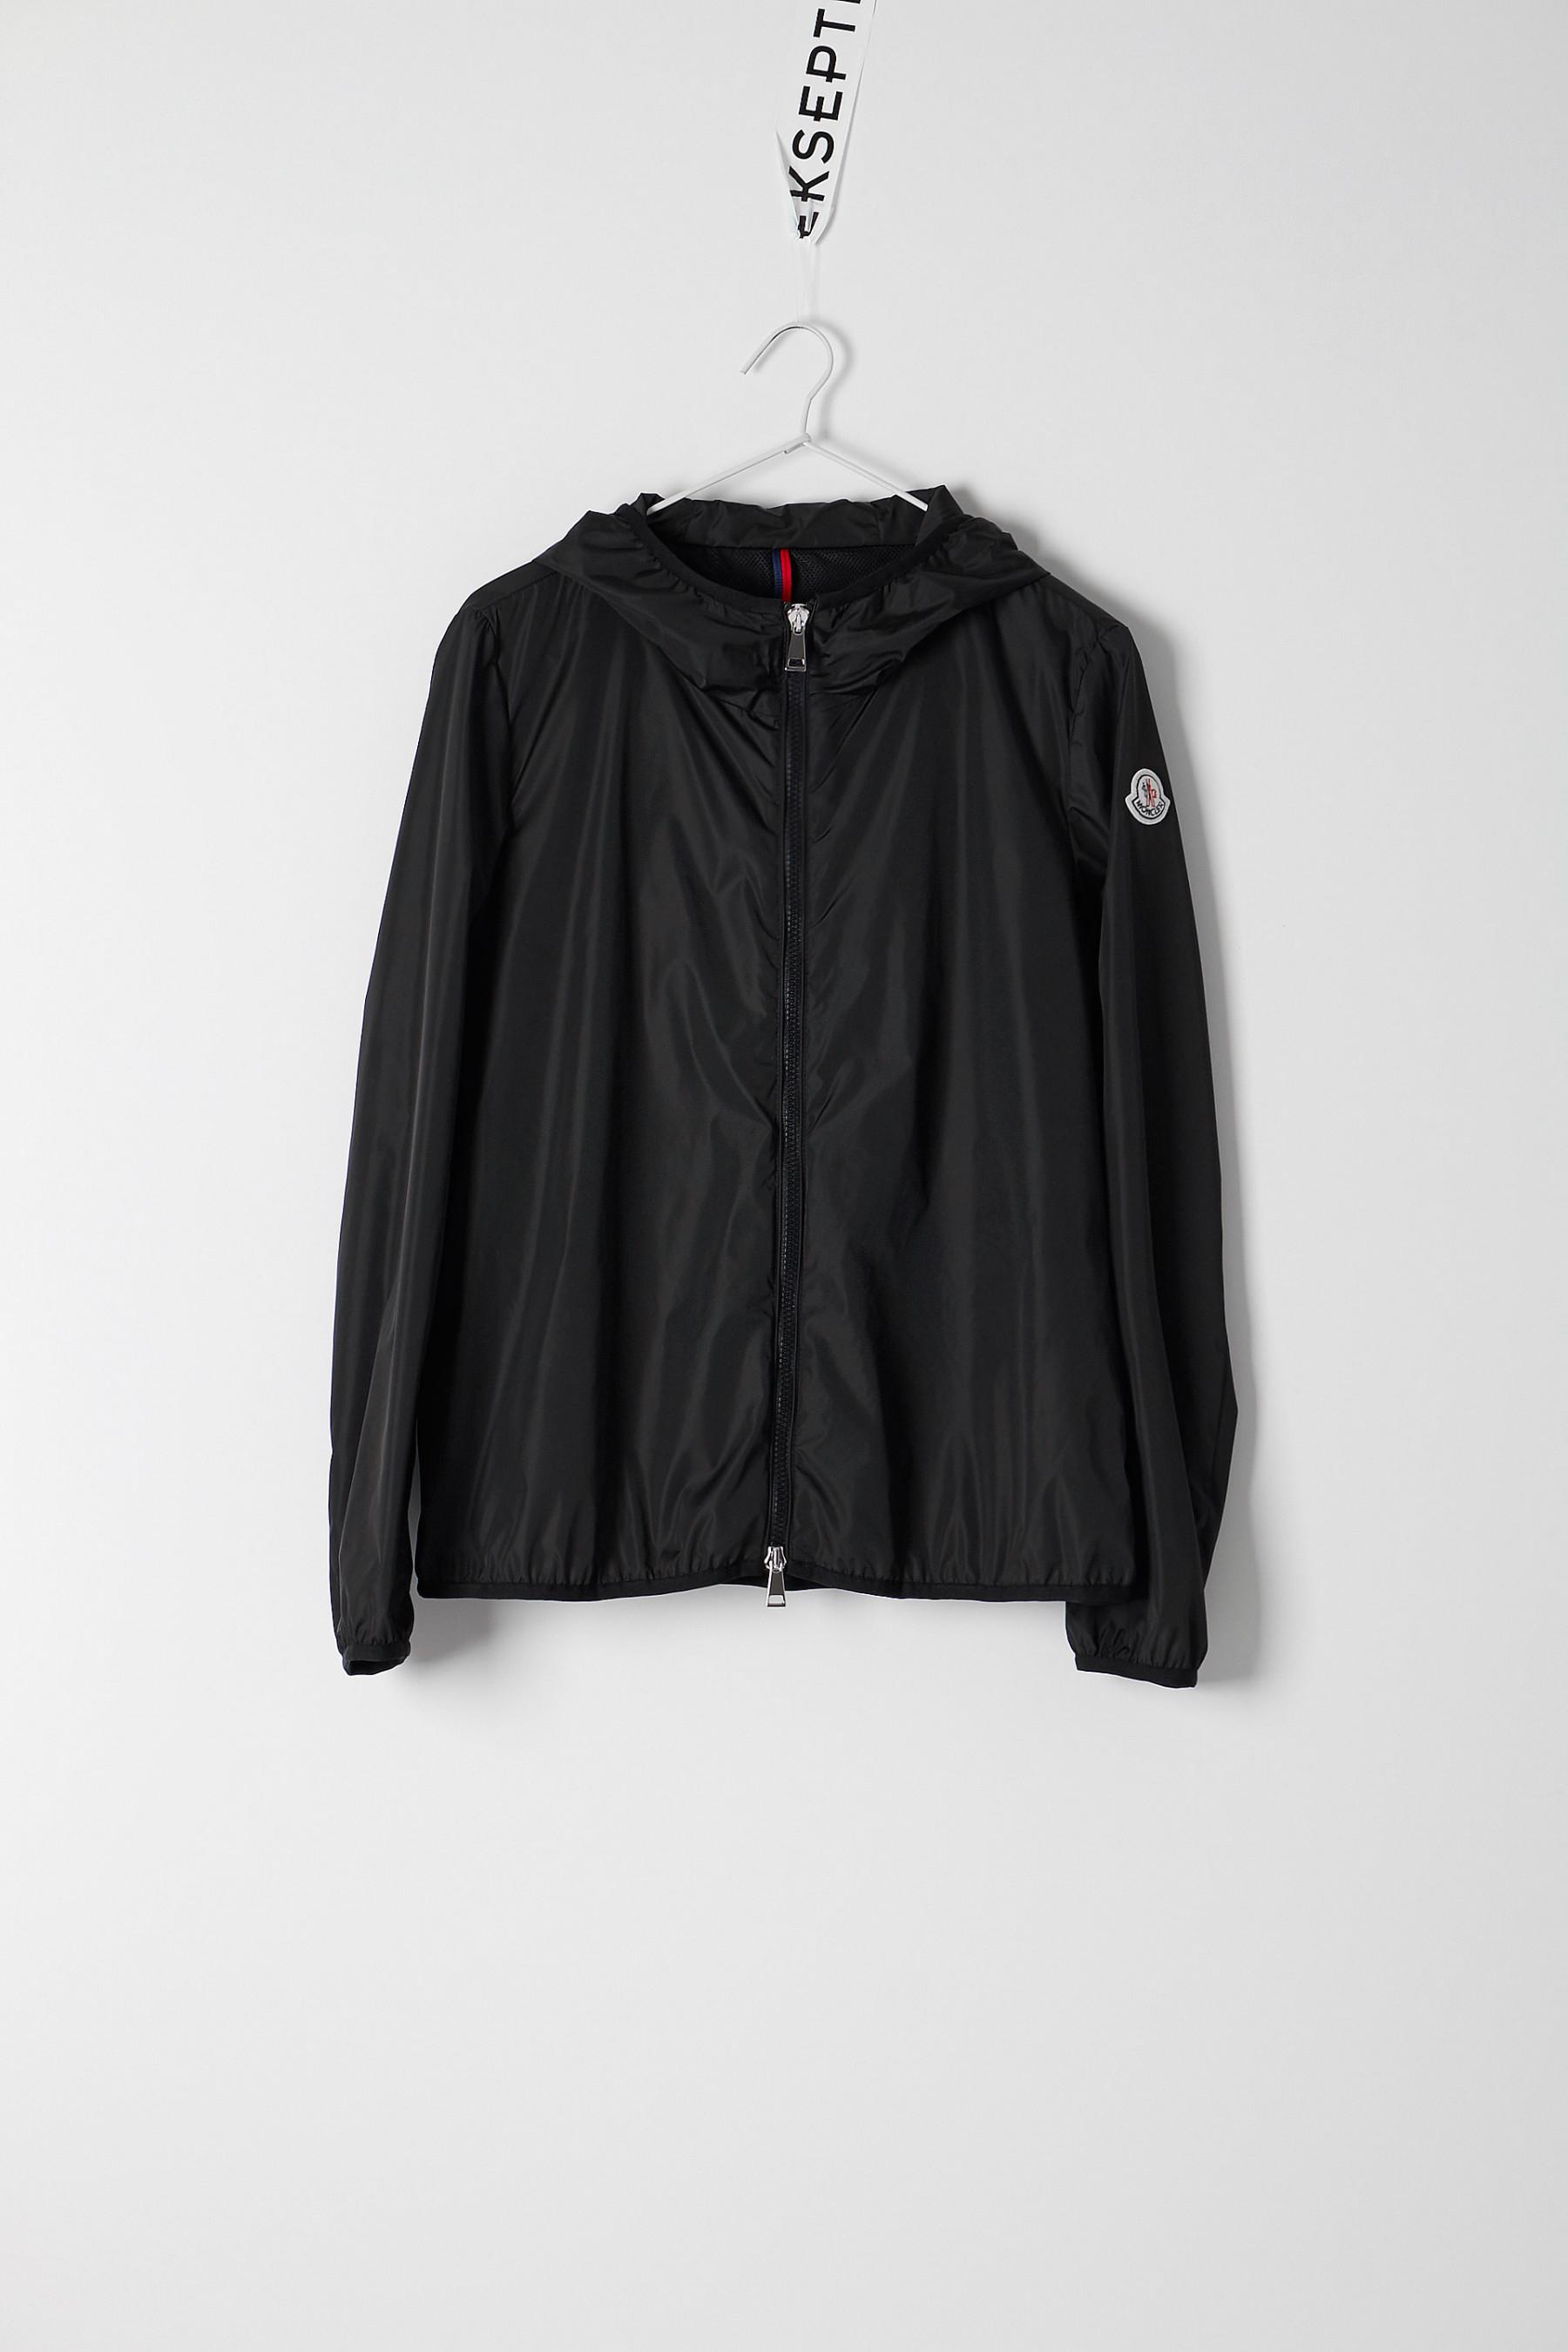 moncler vive jacket black